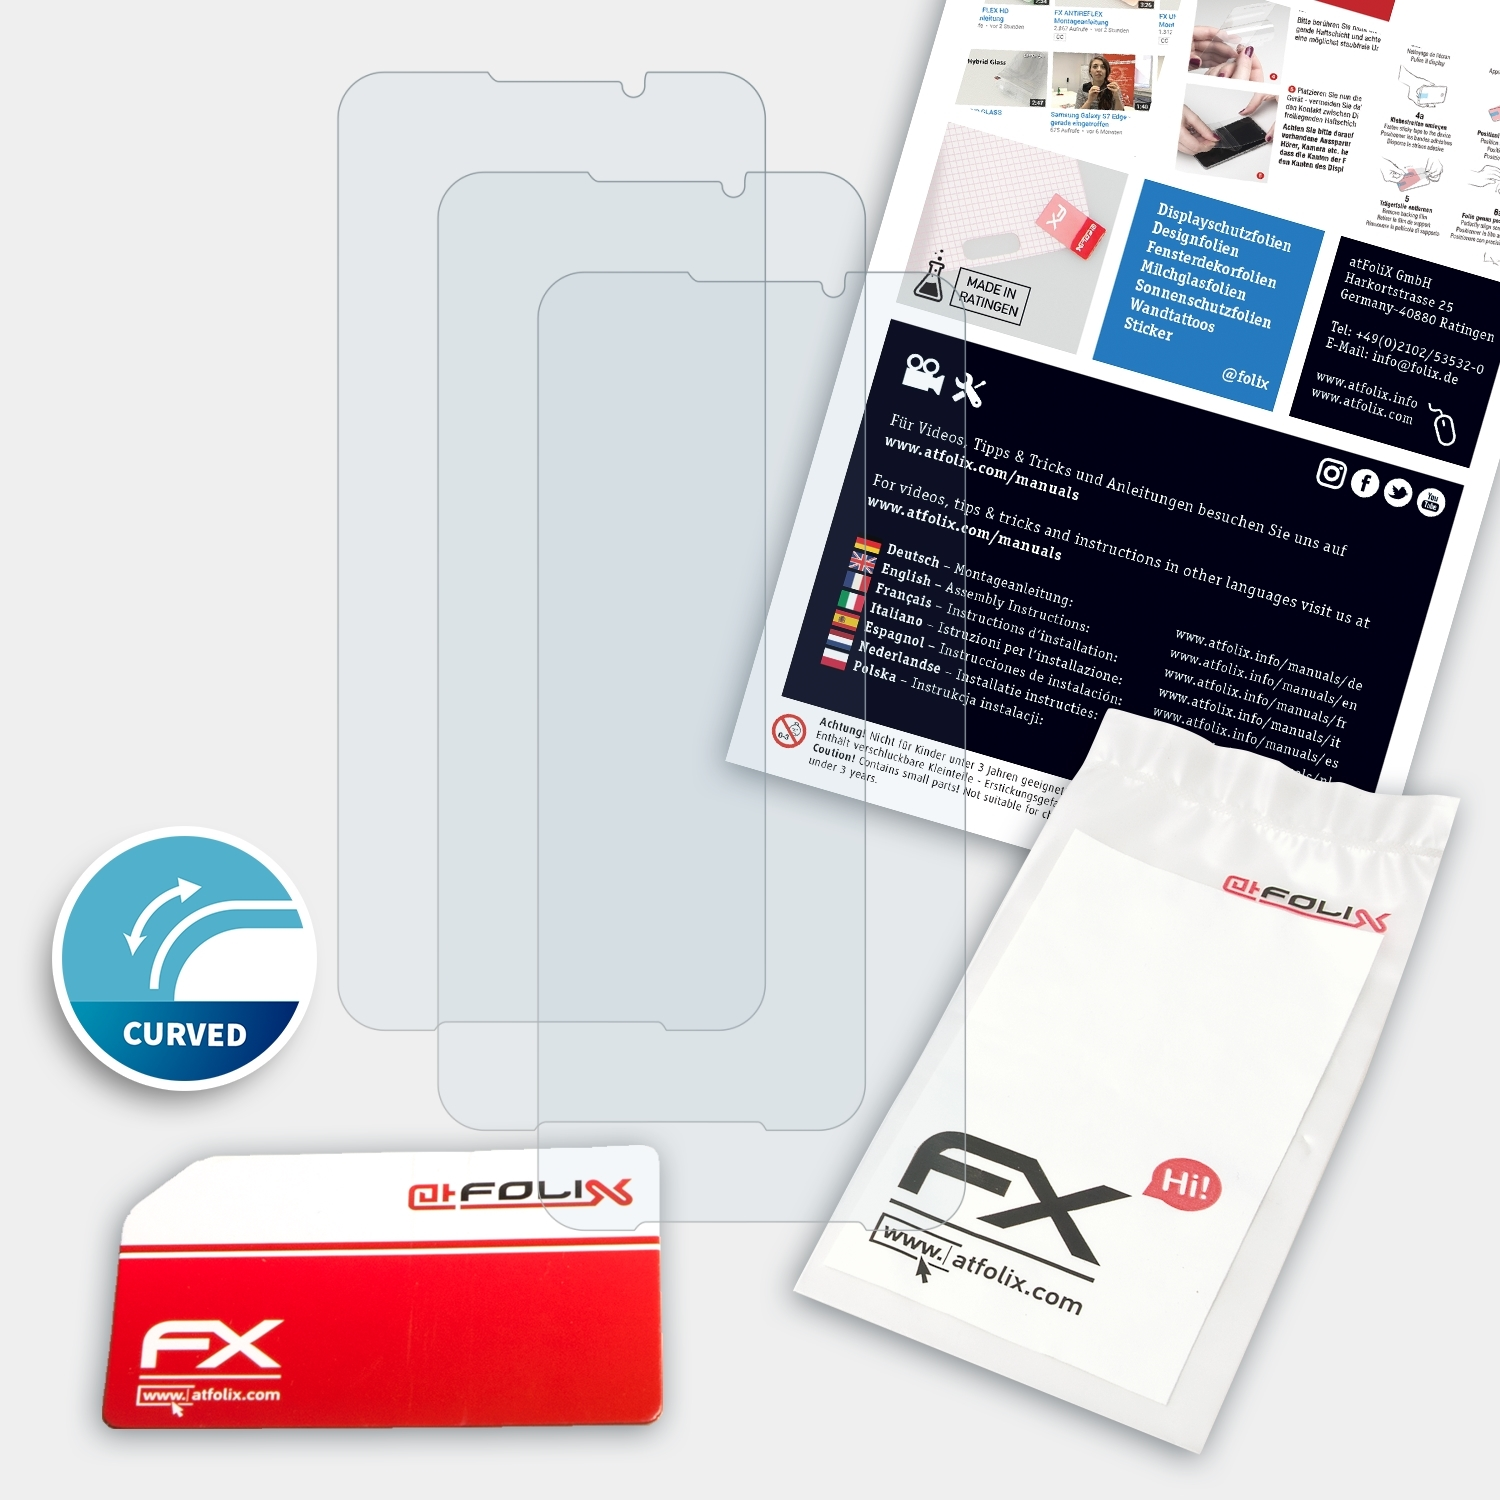 Shark Displayschutz(für ATFOLIX Black Xiaomi 3x 3) FX-ActiFleX